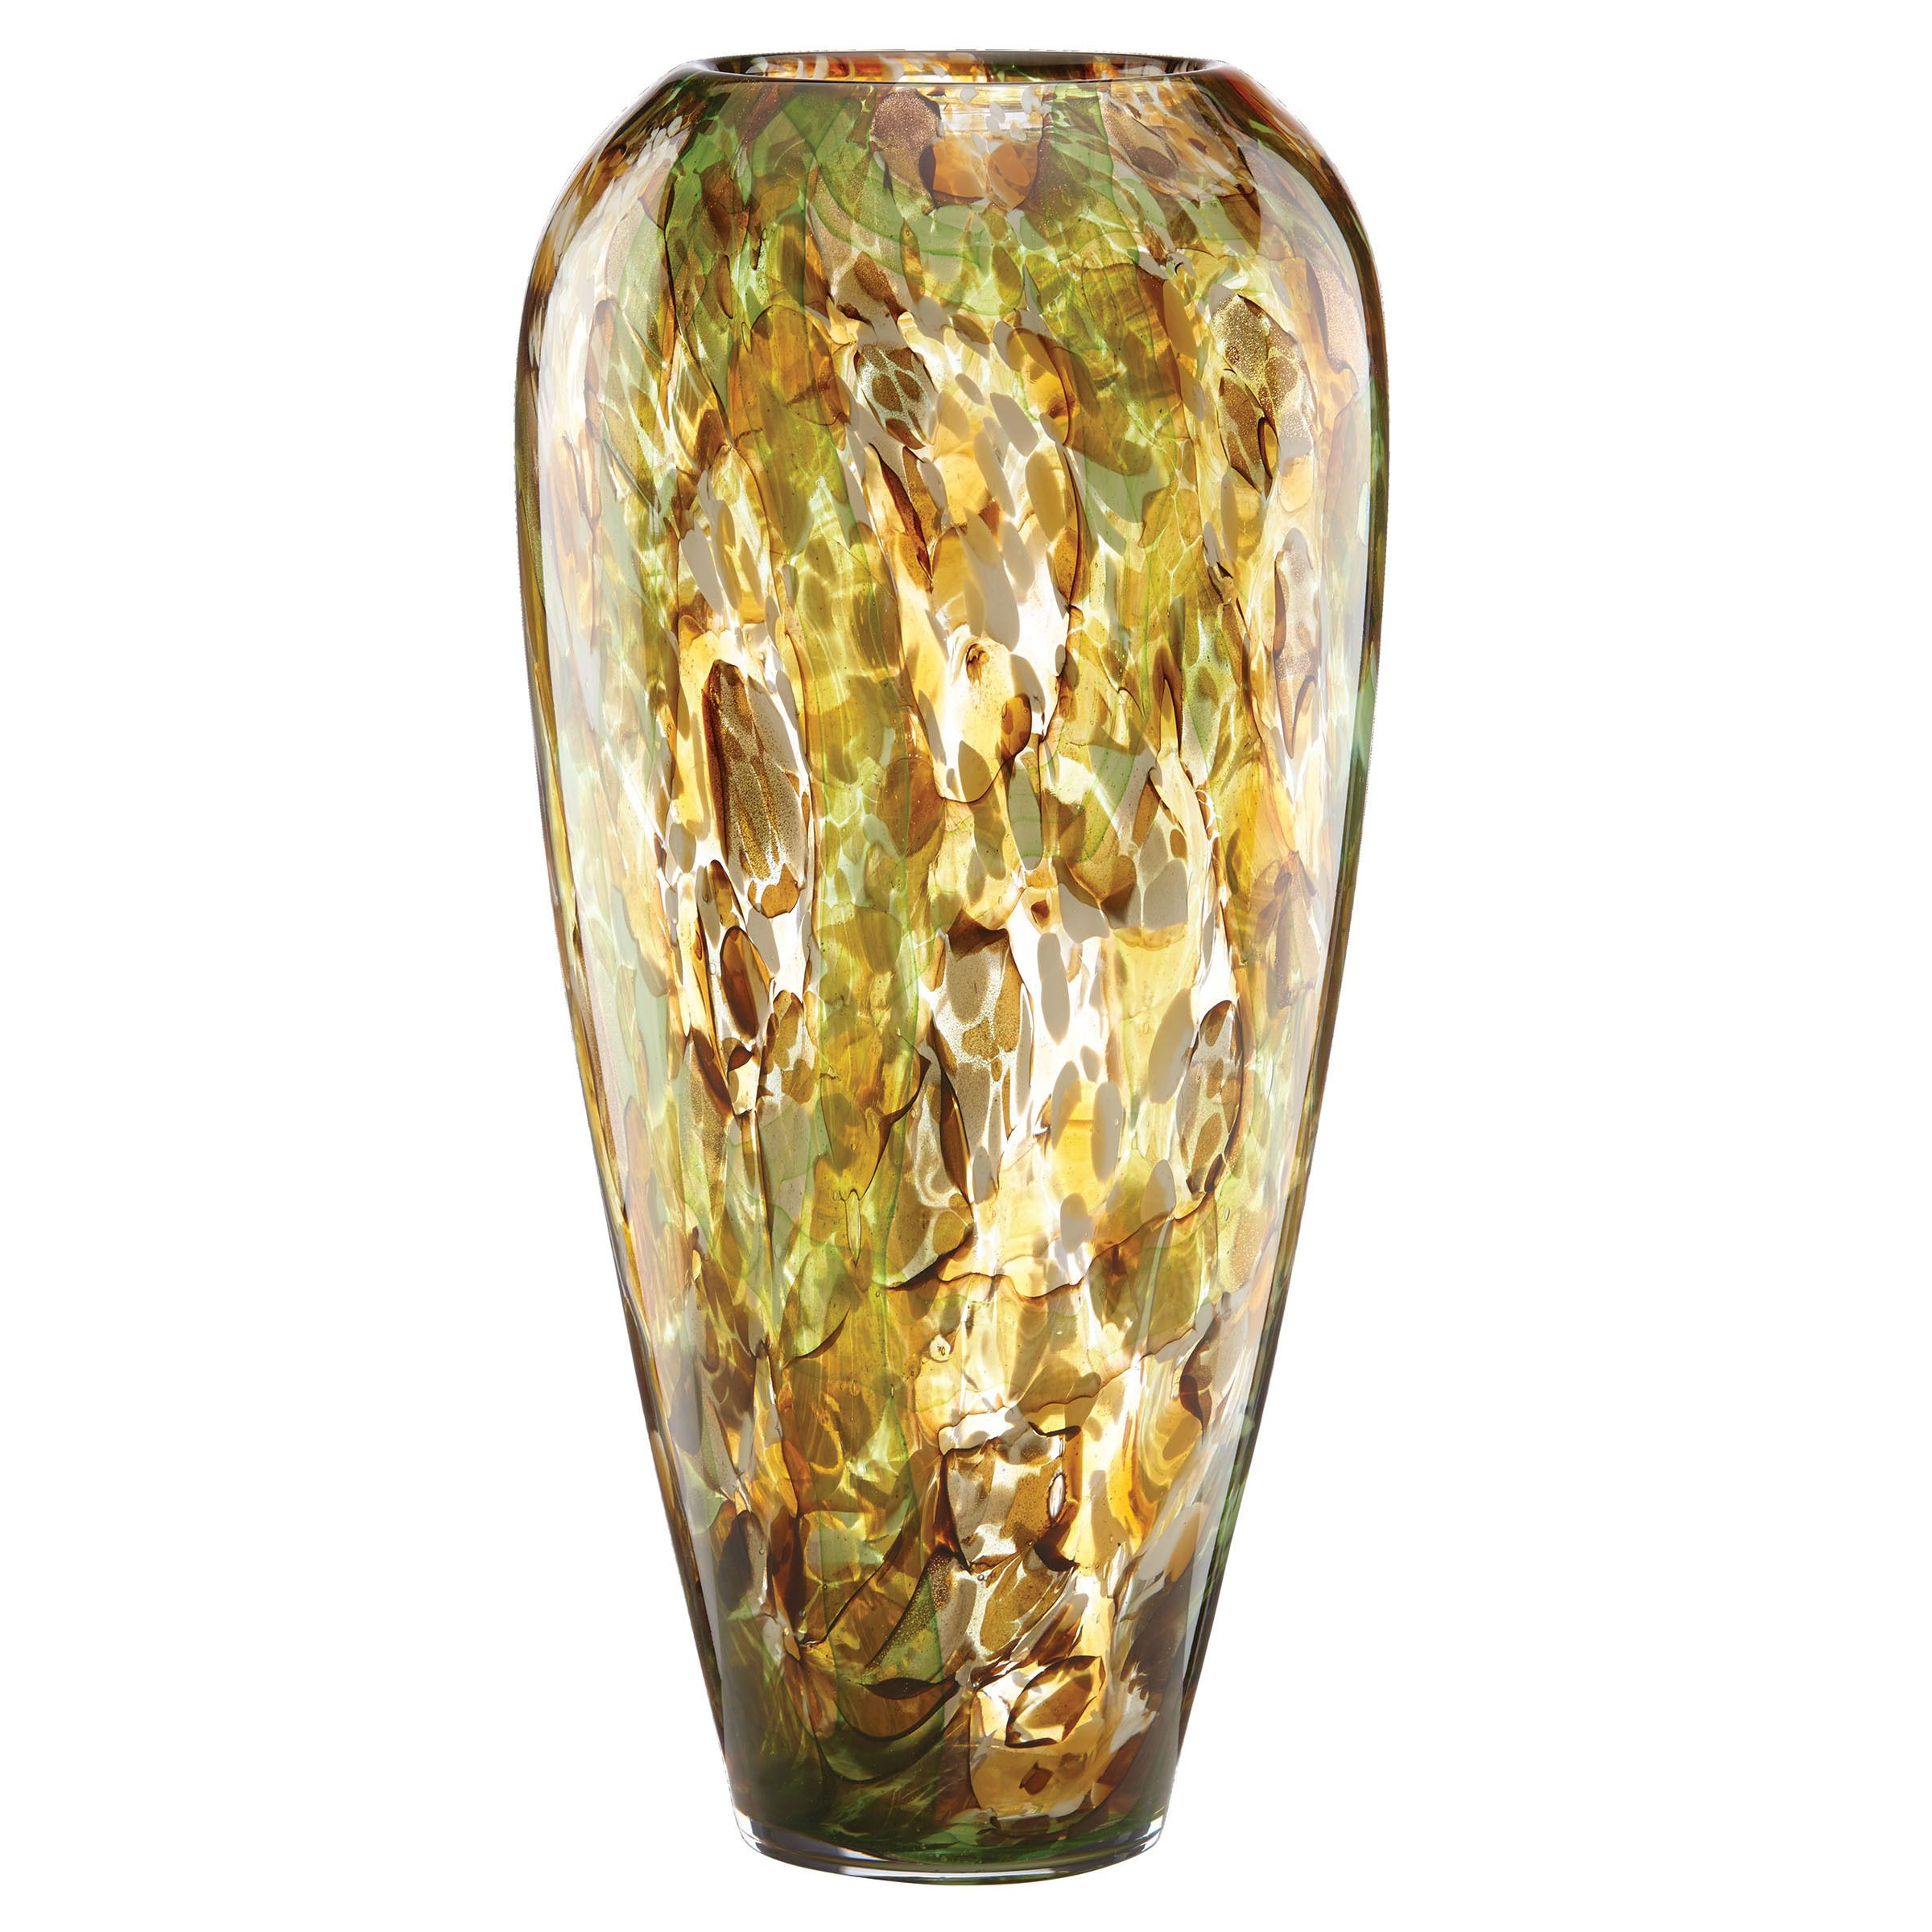 macys crystal vase of lenox seaview tortoise green glass urn vase seaview art glass regarding lenox seaview tortoise glass urn vase seaview art glass tortoise urn vase gold crystal